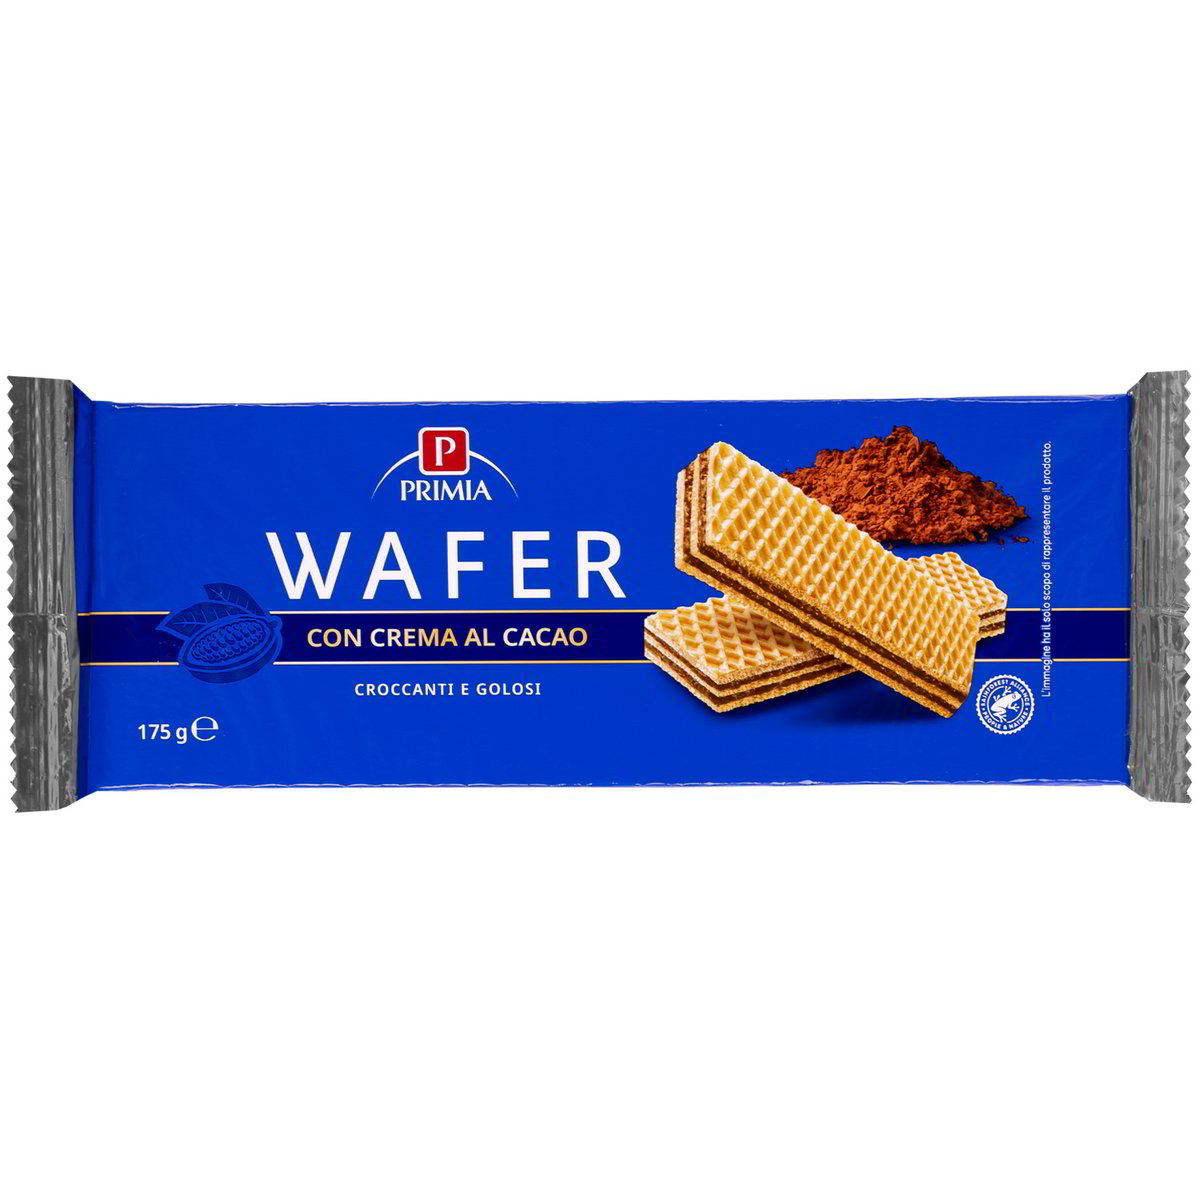 Wafer Con crema al cacao